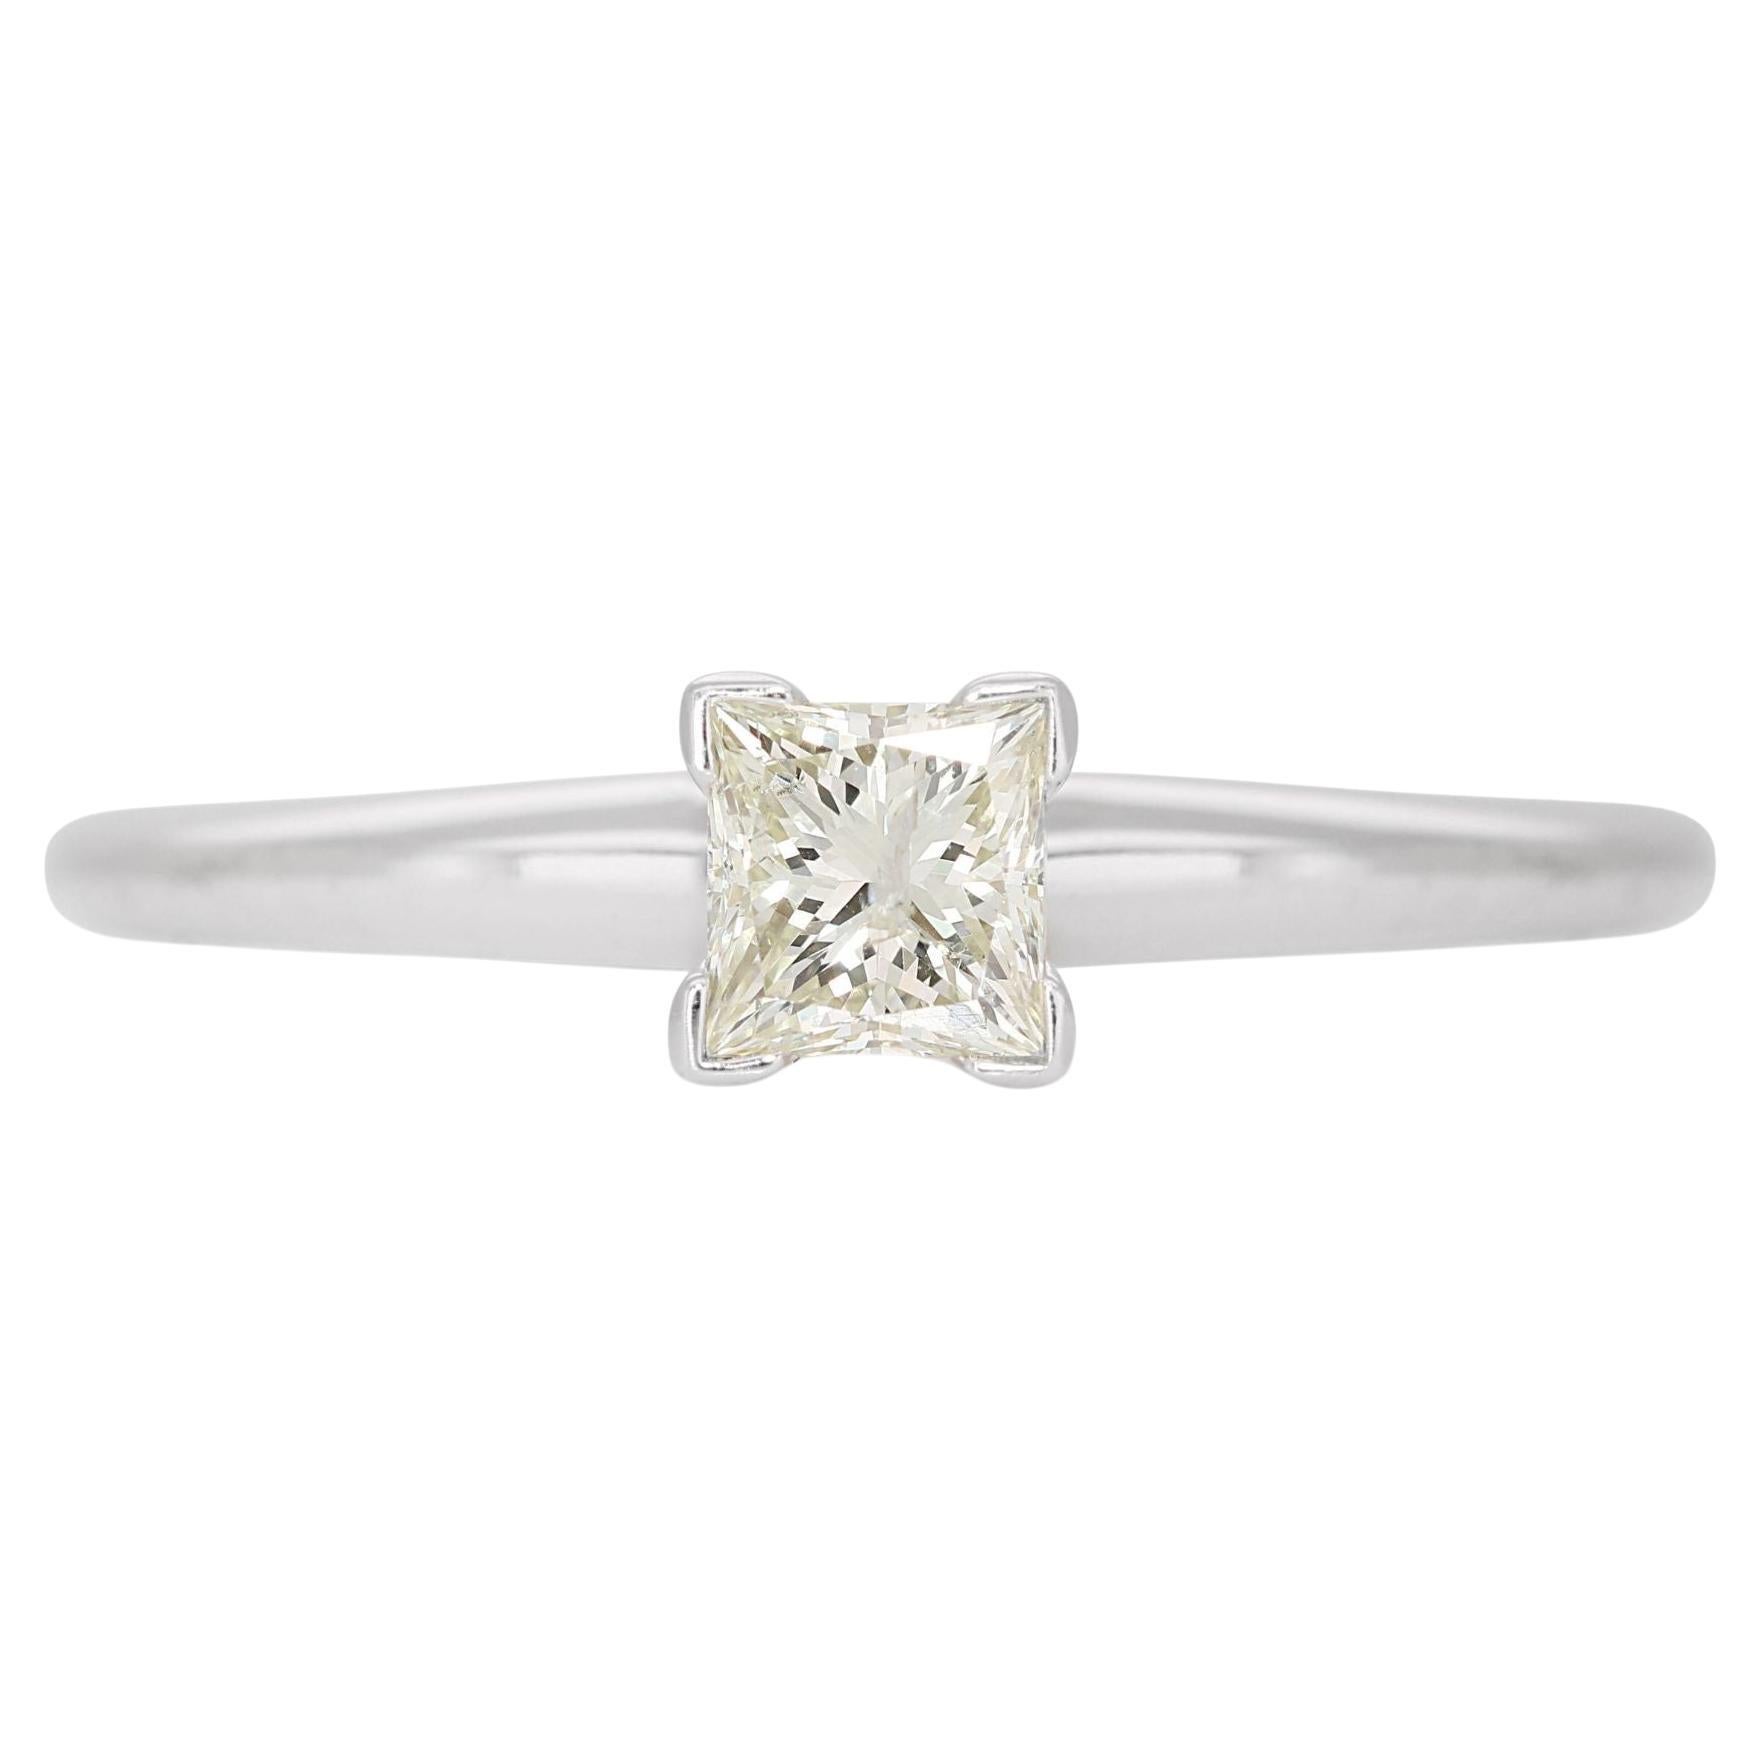 Princess-Cut Diamond in 14K White Gold Ring